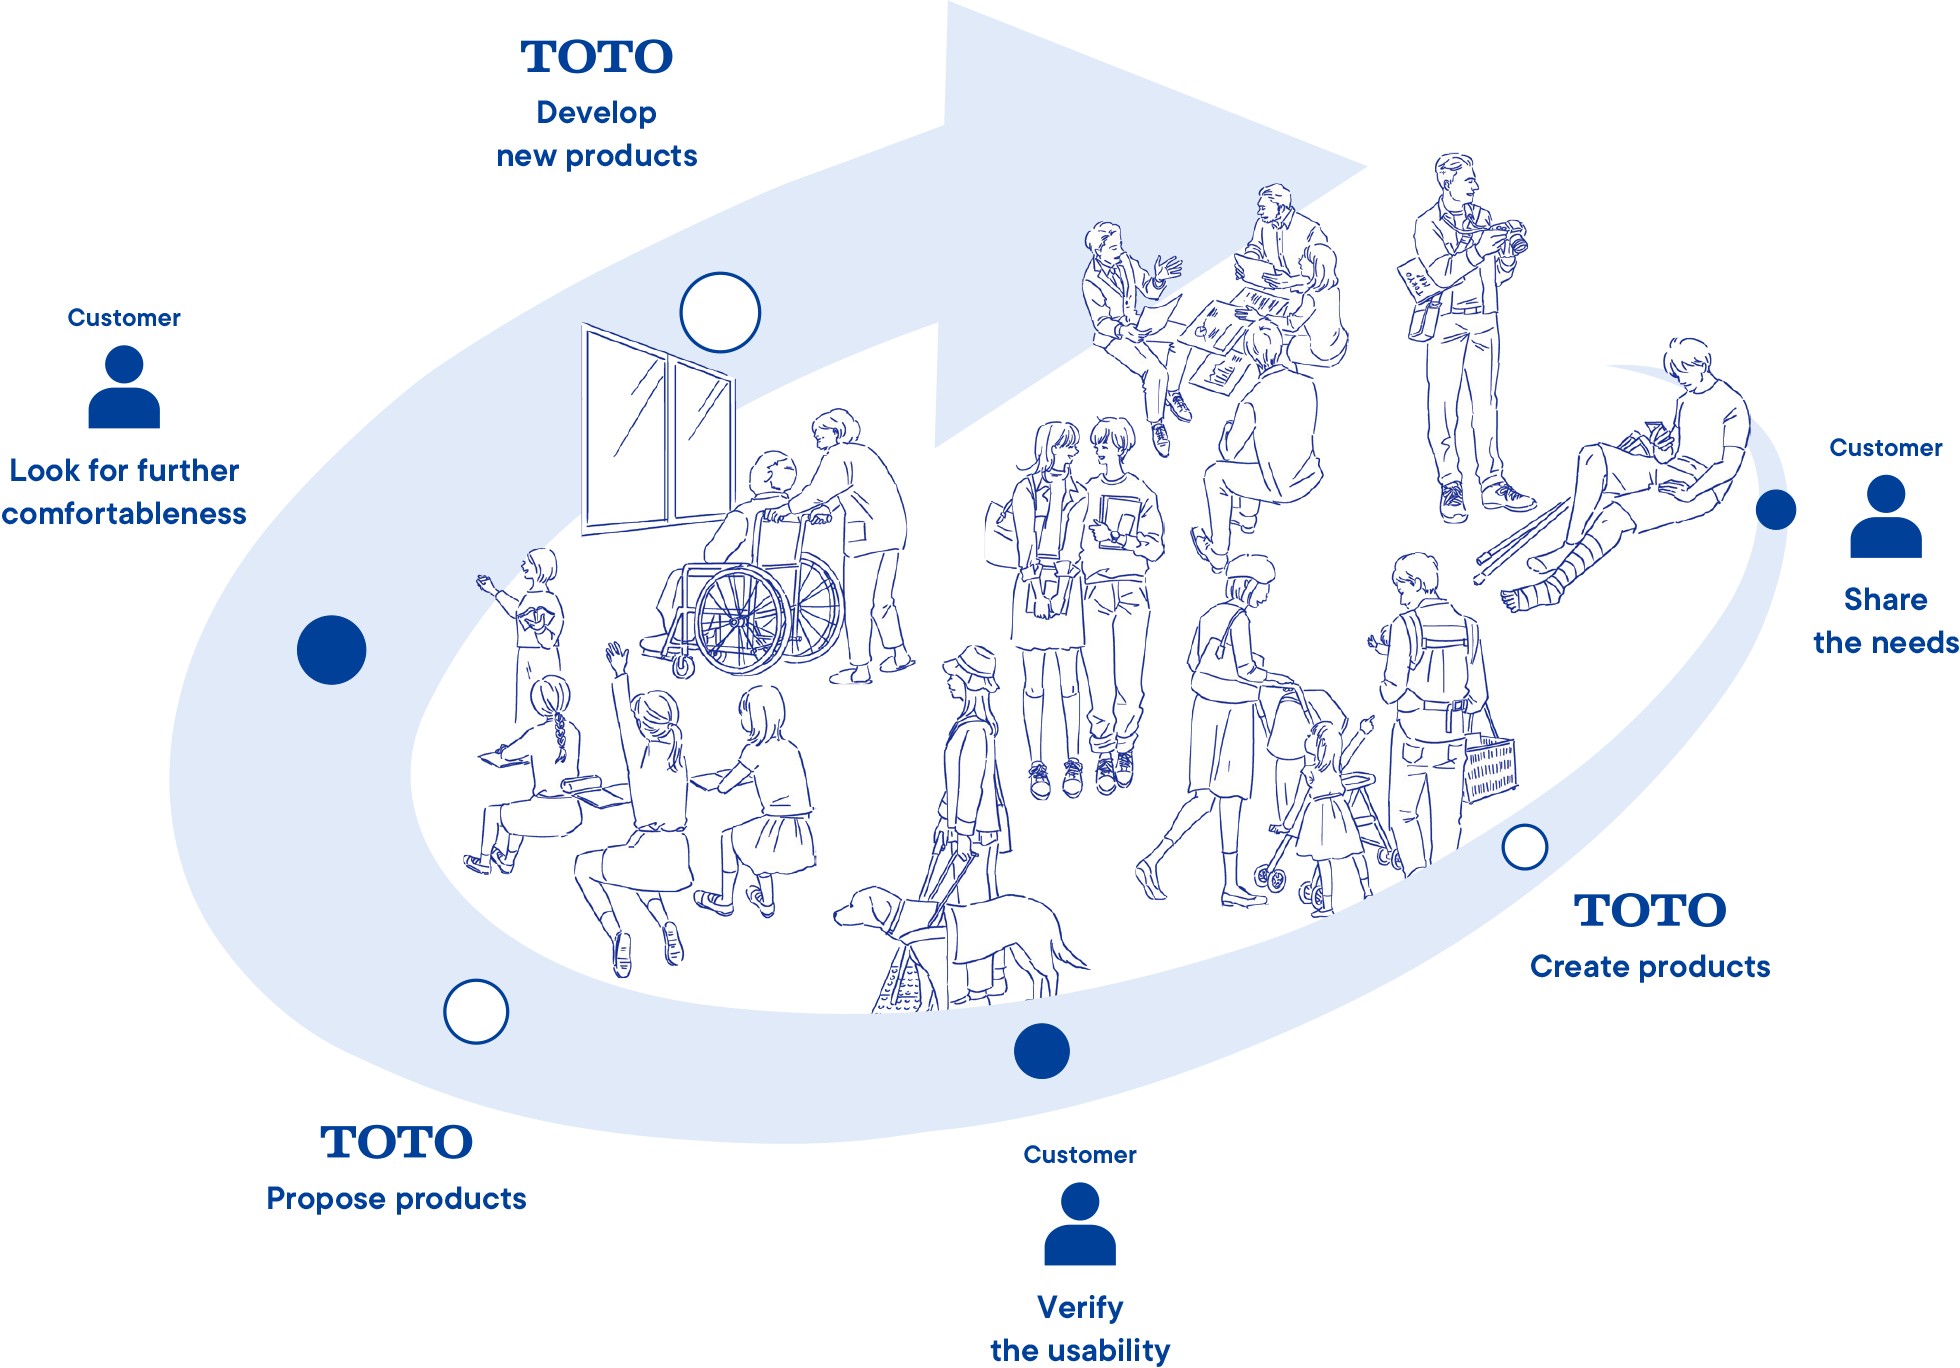 Universal Design of TOTO